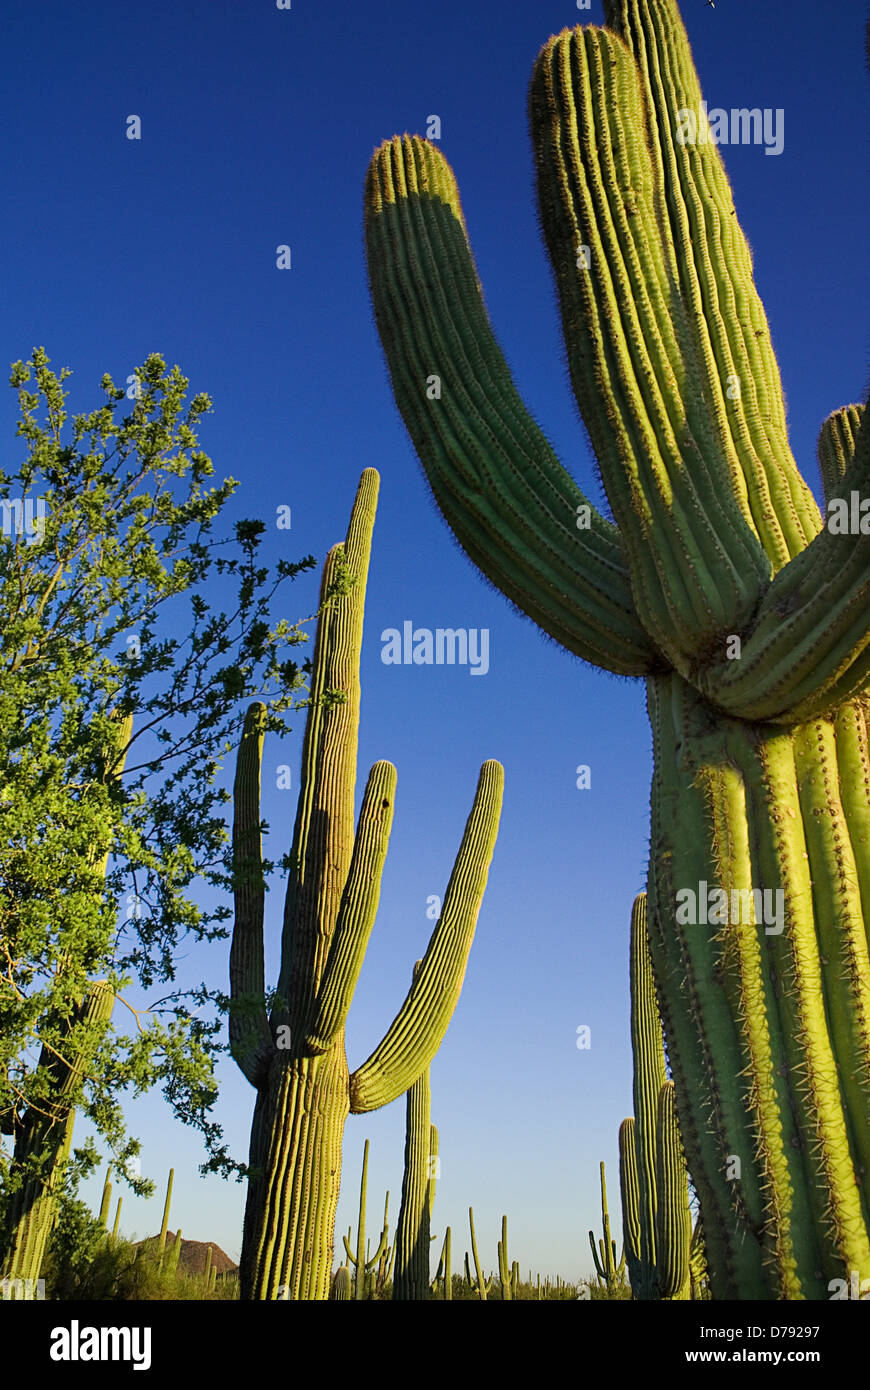 USA, Arizona, Saguaro National Park, Carnegiea gigantea, Giant Saguaro cacti with ribbed branches against blue sky. Stock Photo